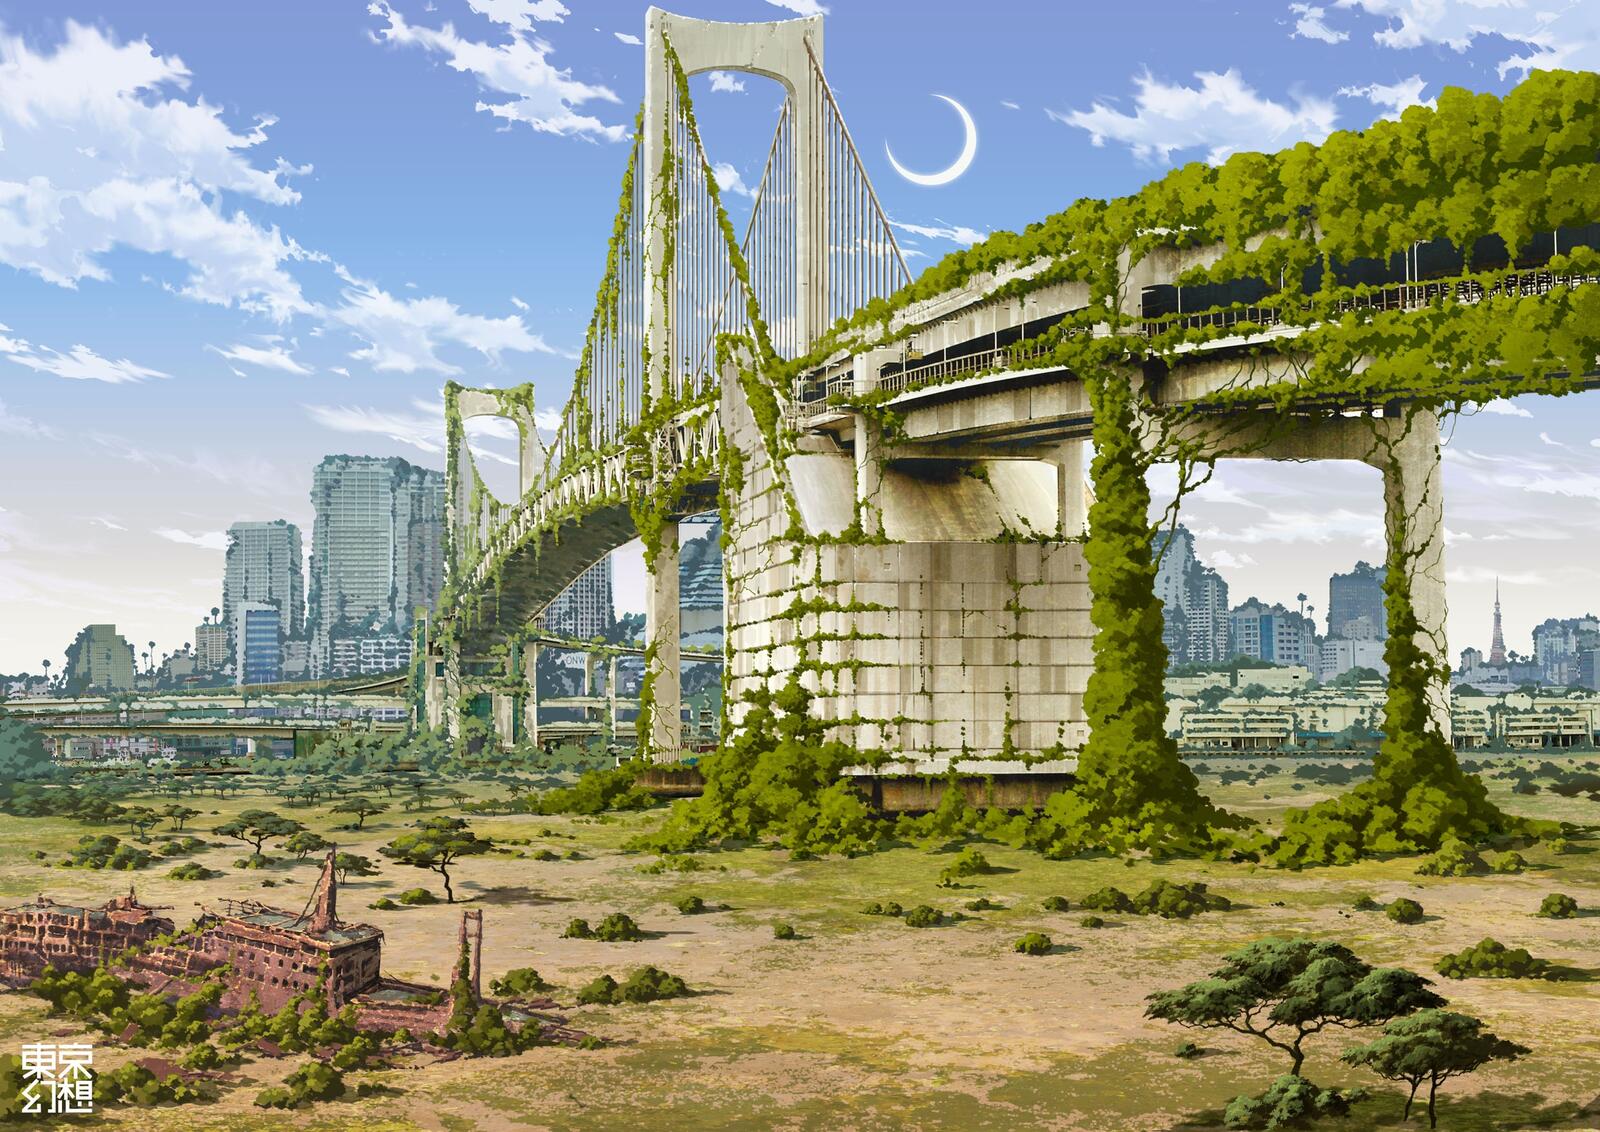 Wallpapers wallpaper half moon anime apocalypse bridge on the desktop